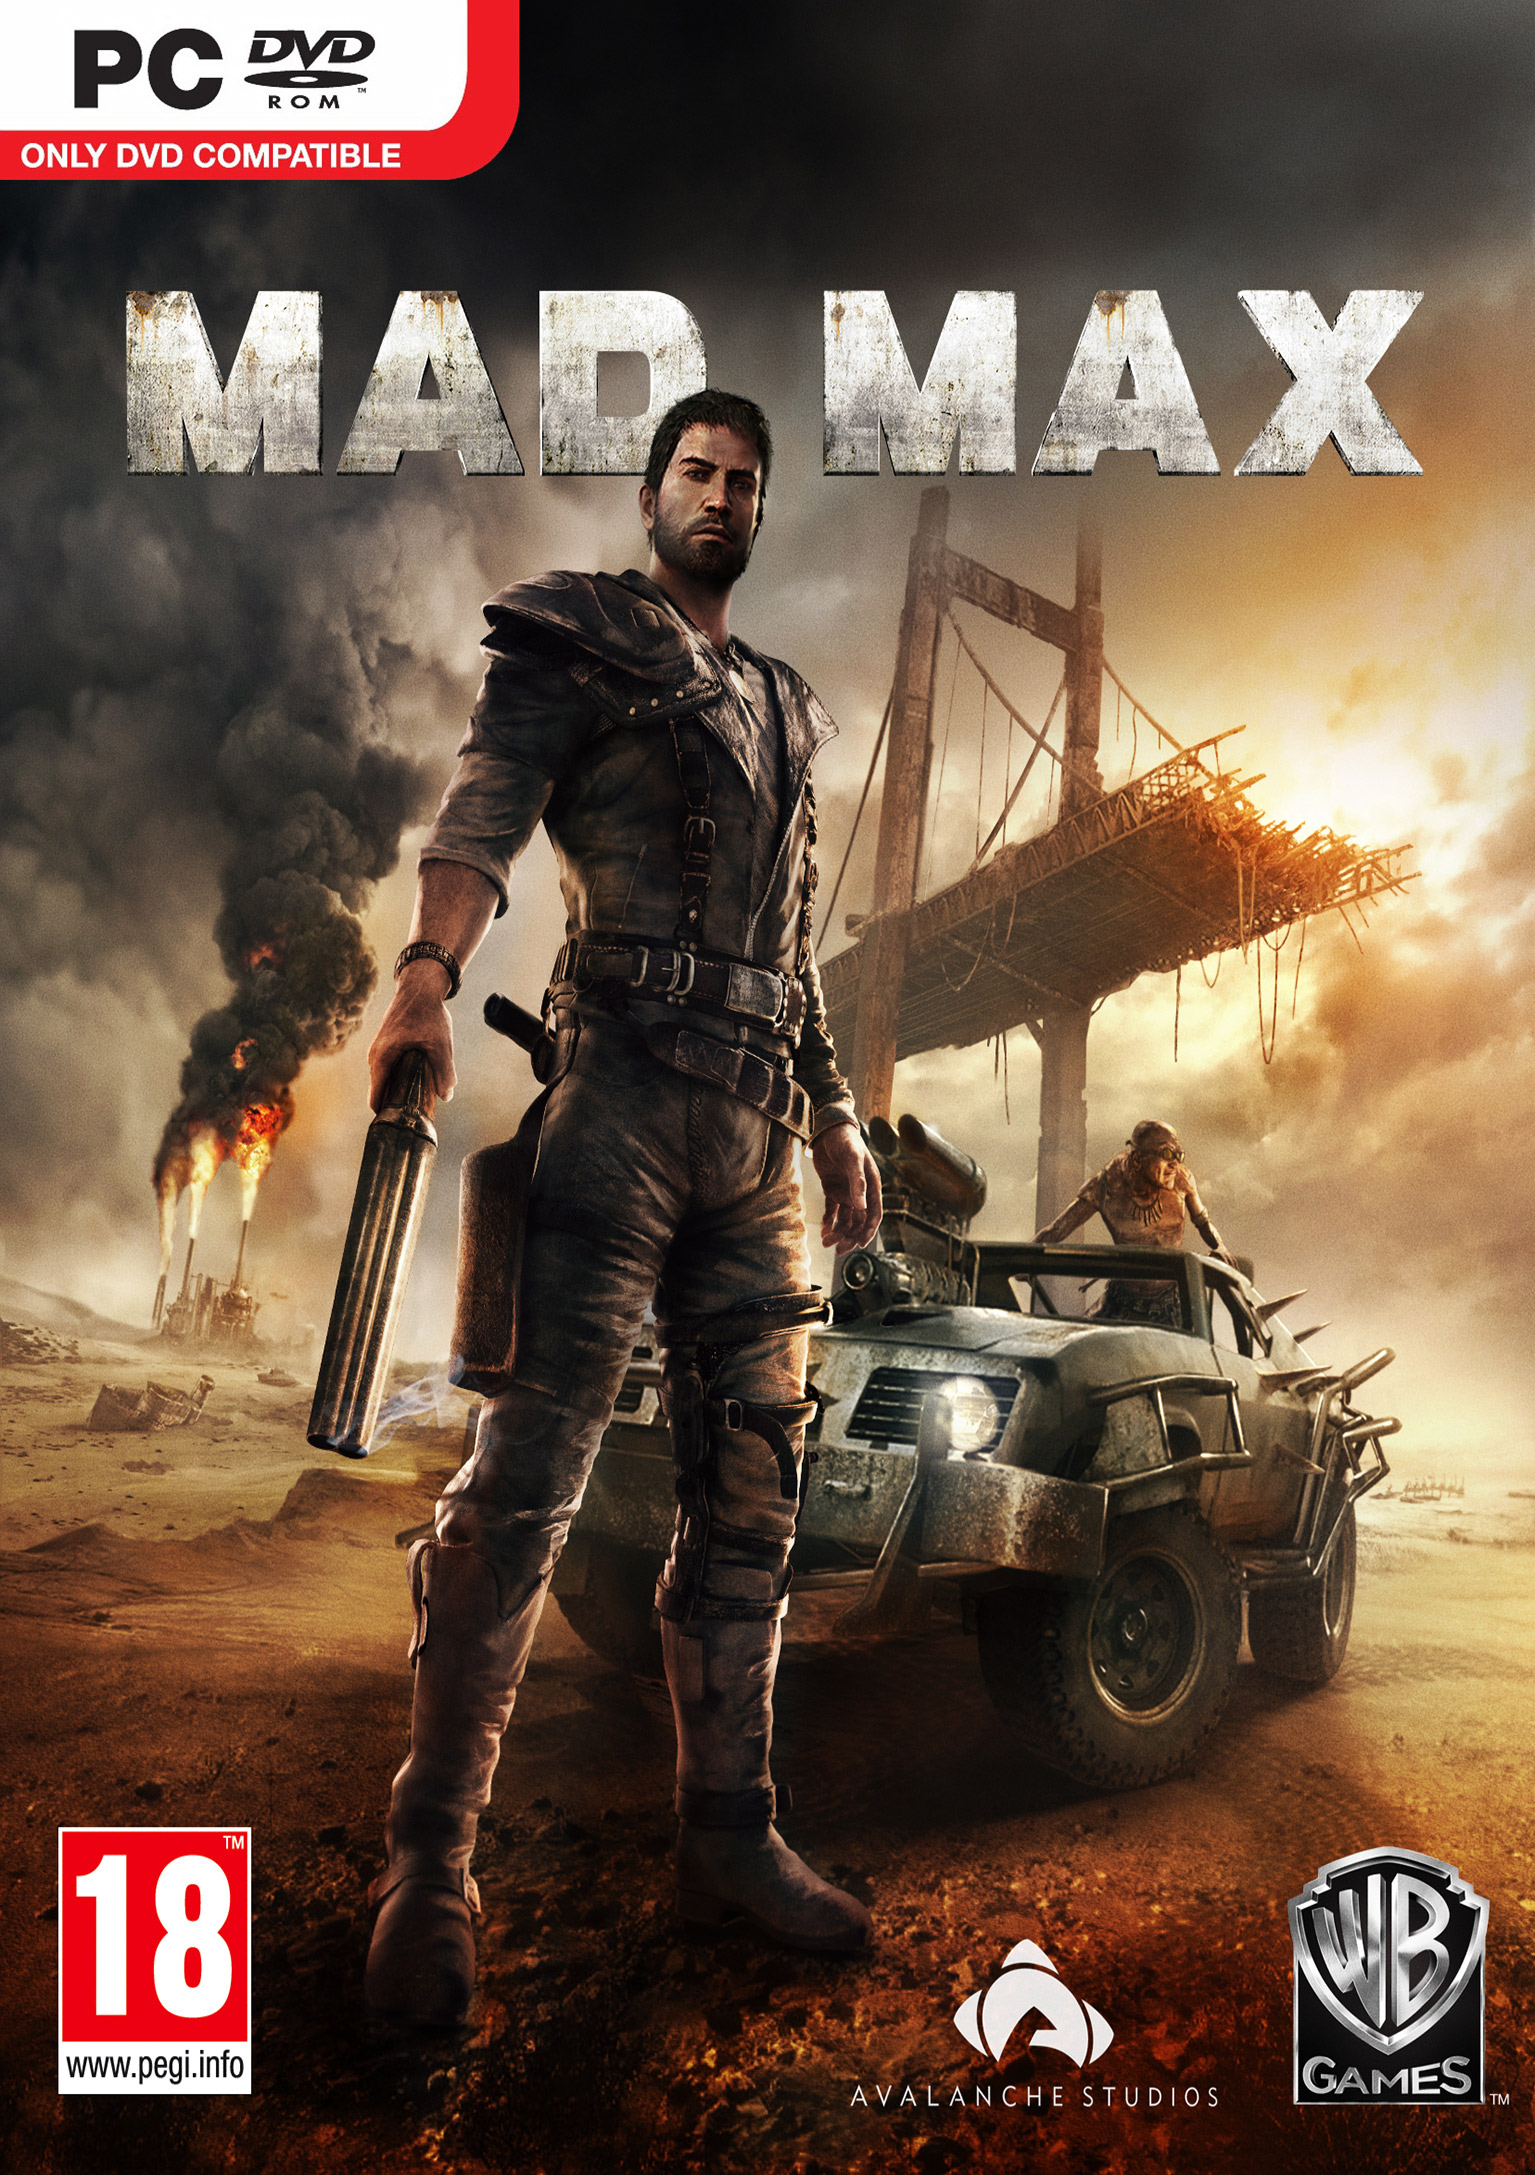 Mad Max - predn DVD obal